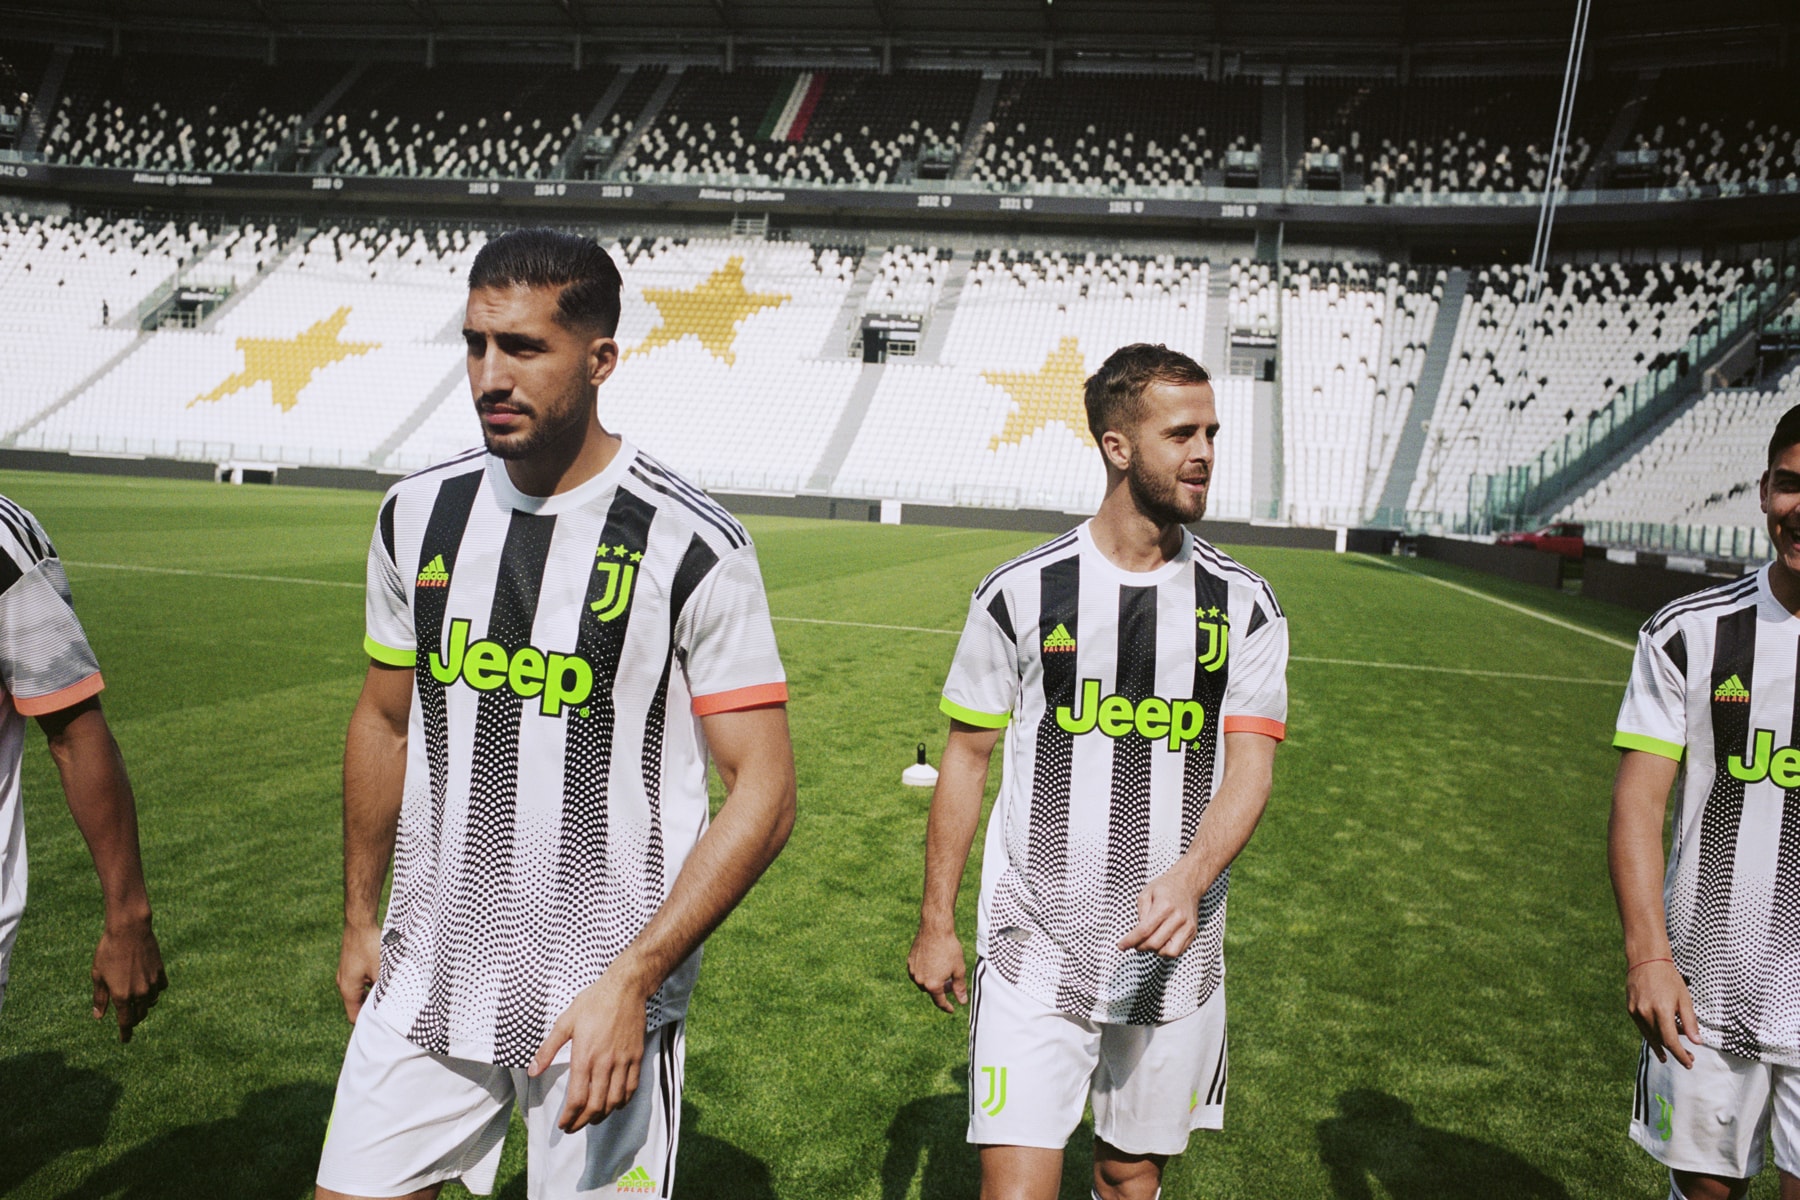 Gucci Juventus Jersey Soccer Shirt and Short